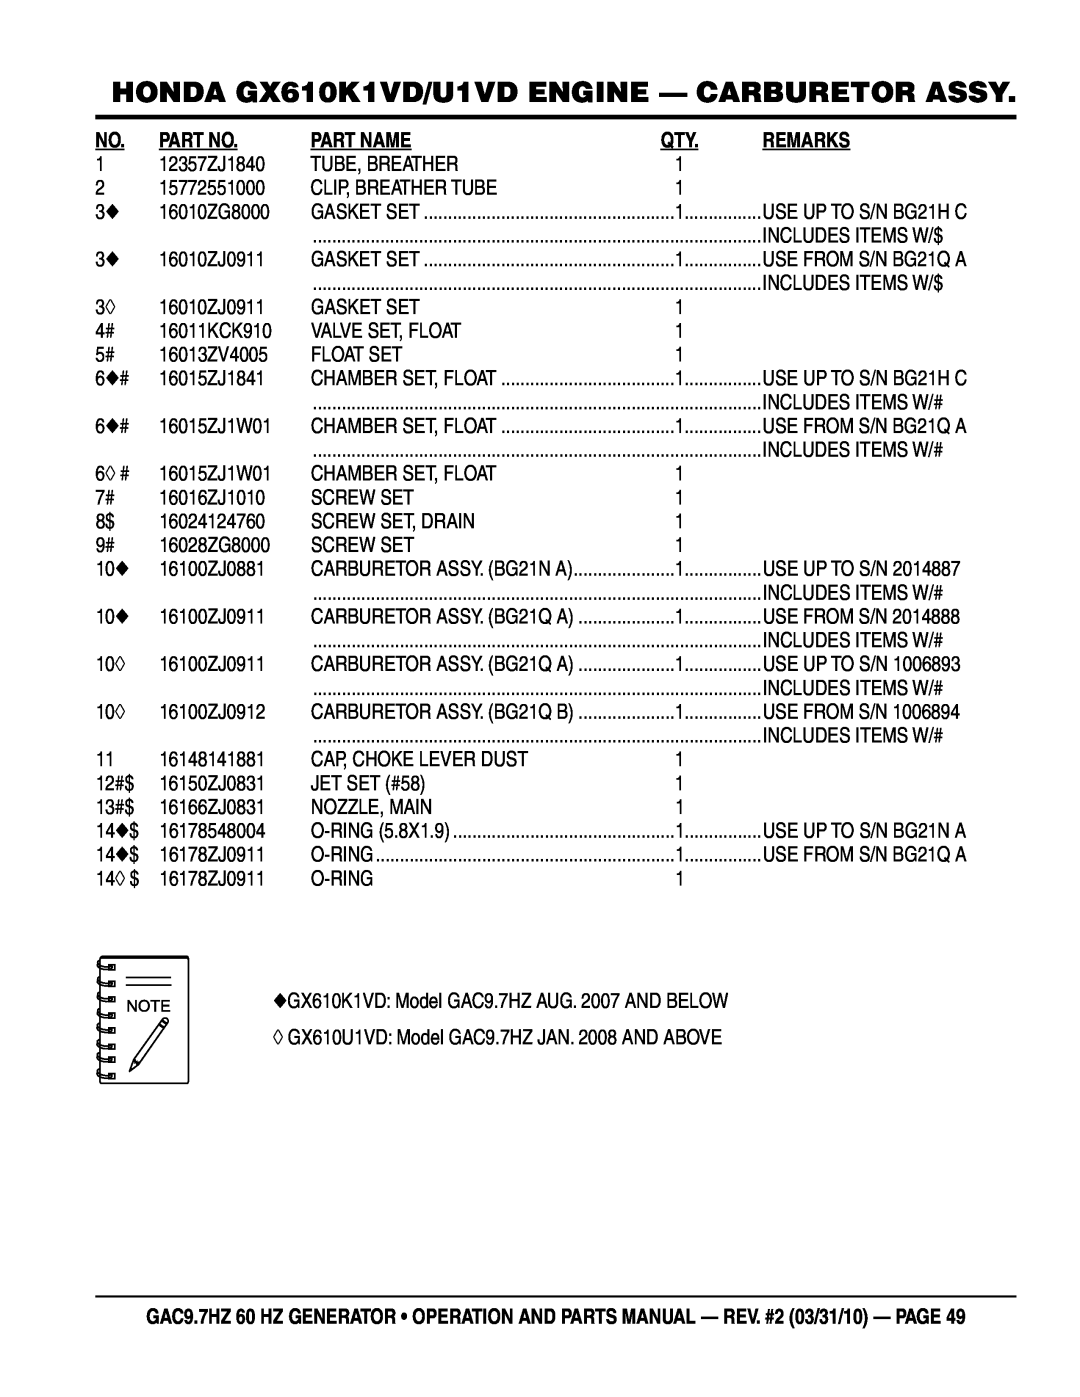 Multiquip GAC-9.7HZ manual HONDA GX610K1VD/U1VD ENGINE - CARBURETOR ASSY, Part Name, Remarks 